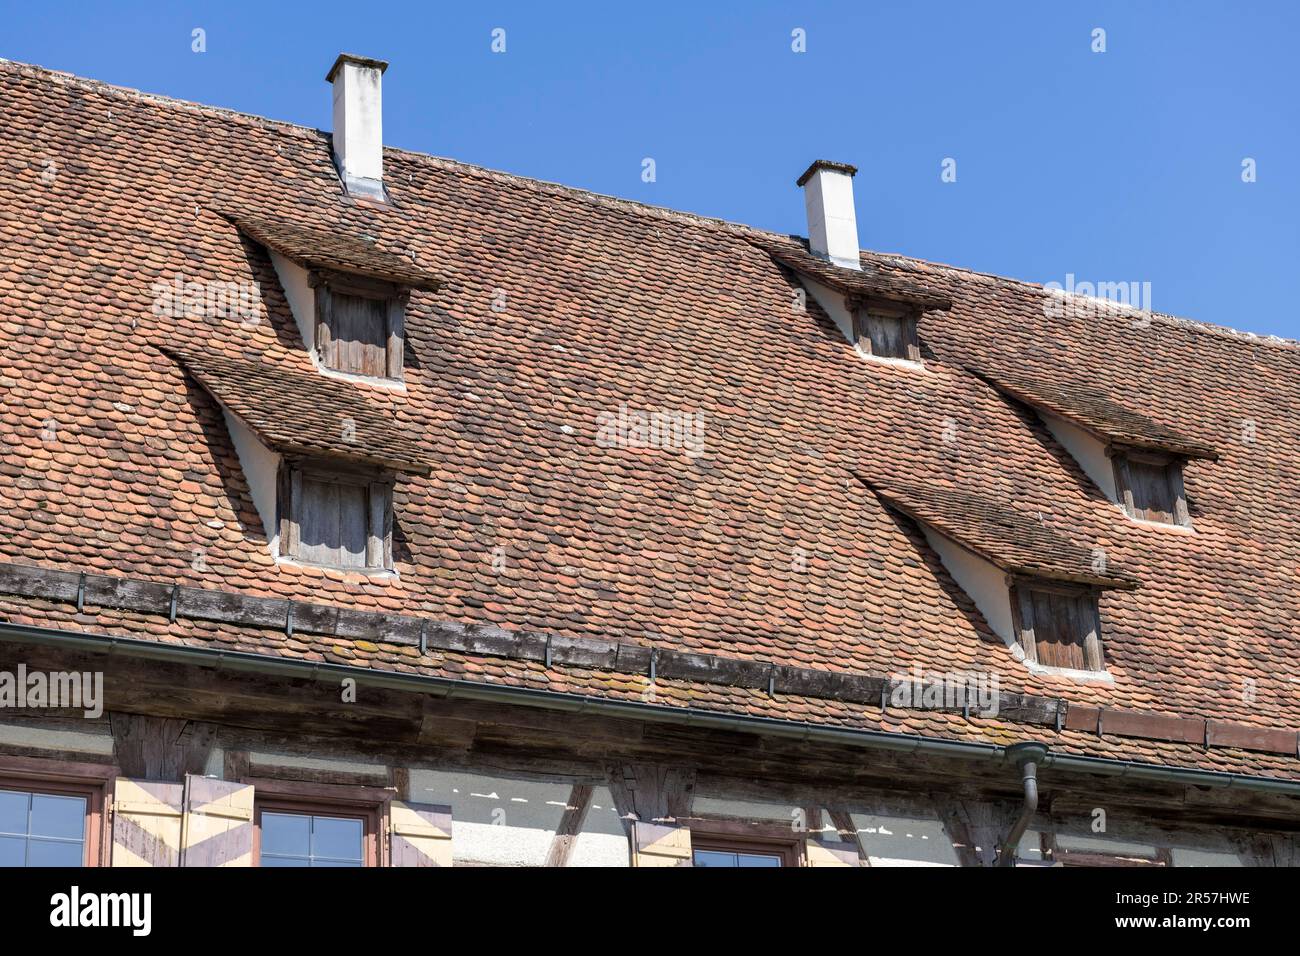 Tiled roof with dormers and chimneys, Blaubeuren, Alb-Donau-Kreis, Swabian Alb, Baden-Wuerttemberg, Germany Stock Photo